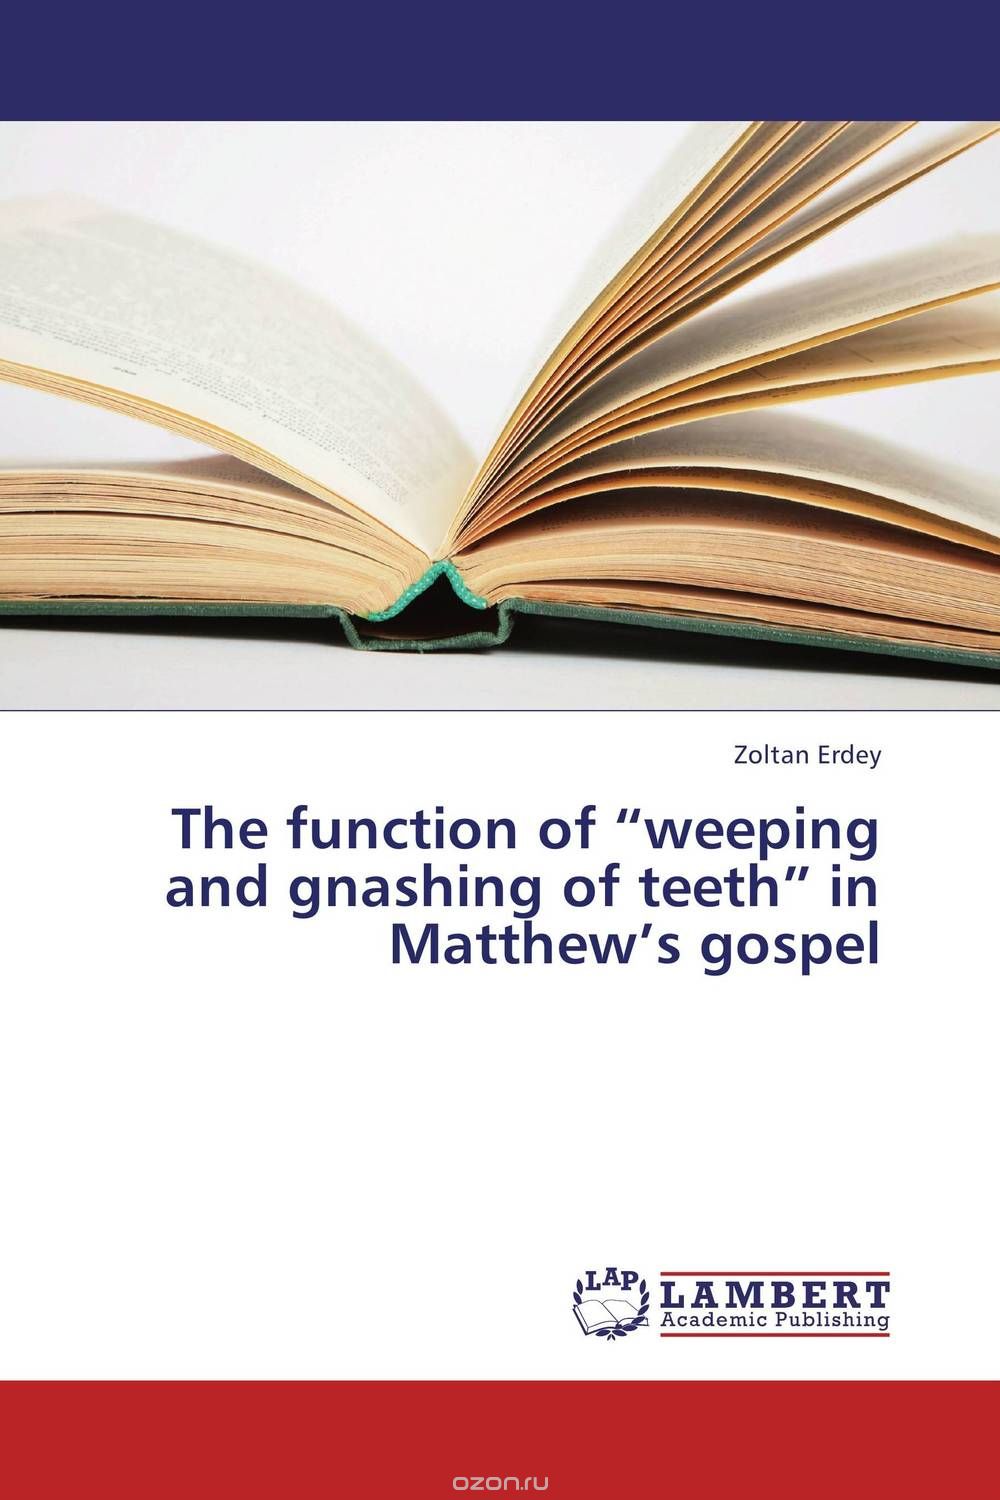 Скачать книгу "The function of “weeping and gnashing of teeth” in Matthew’s gospel"